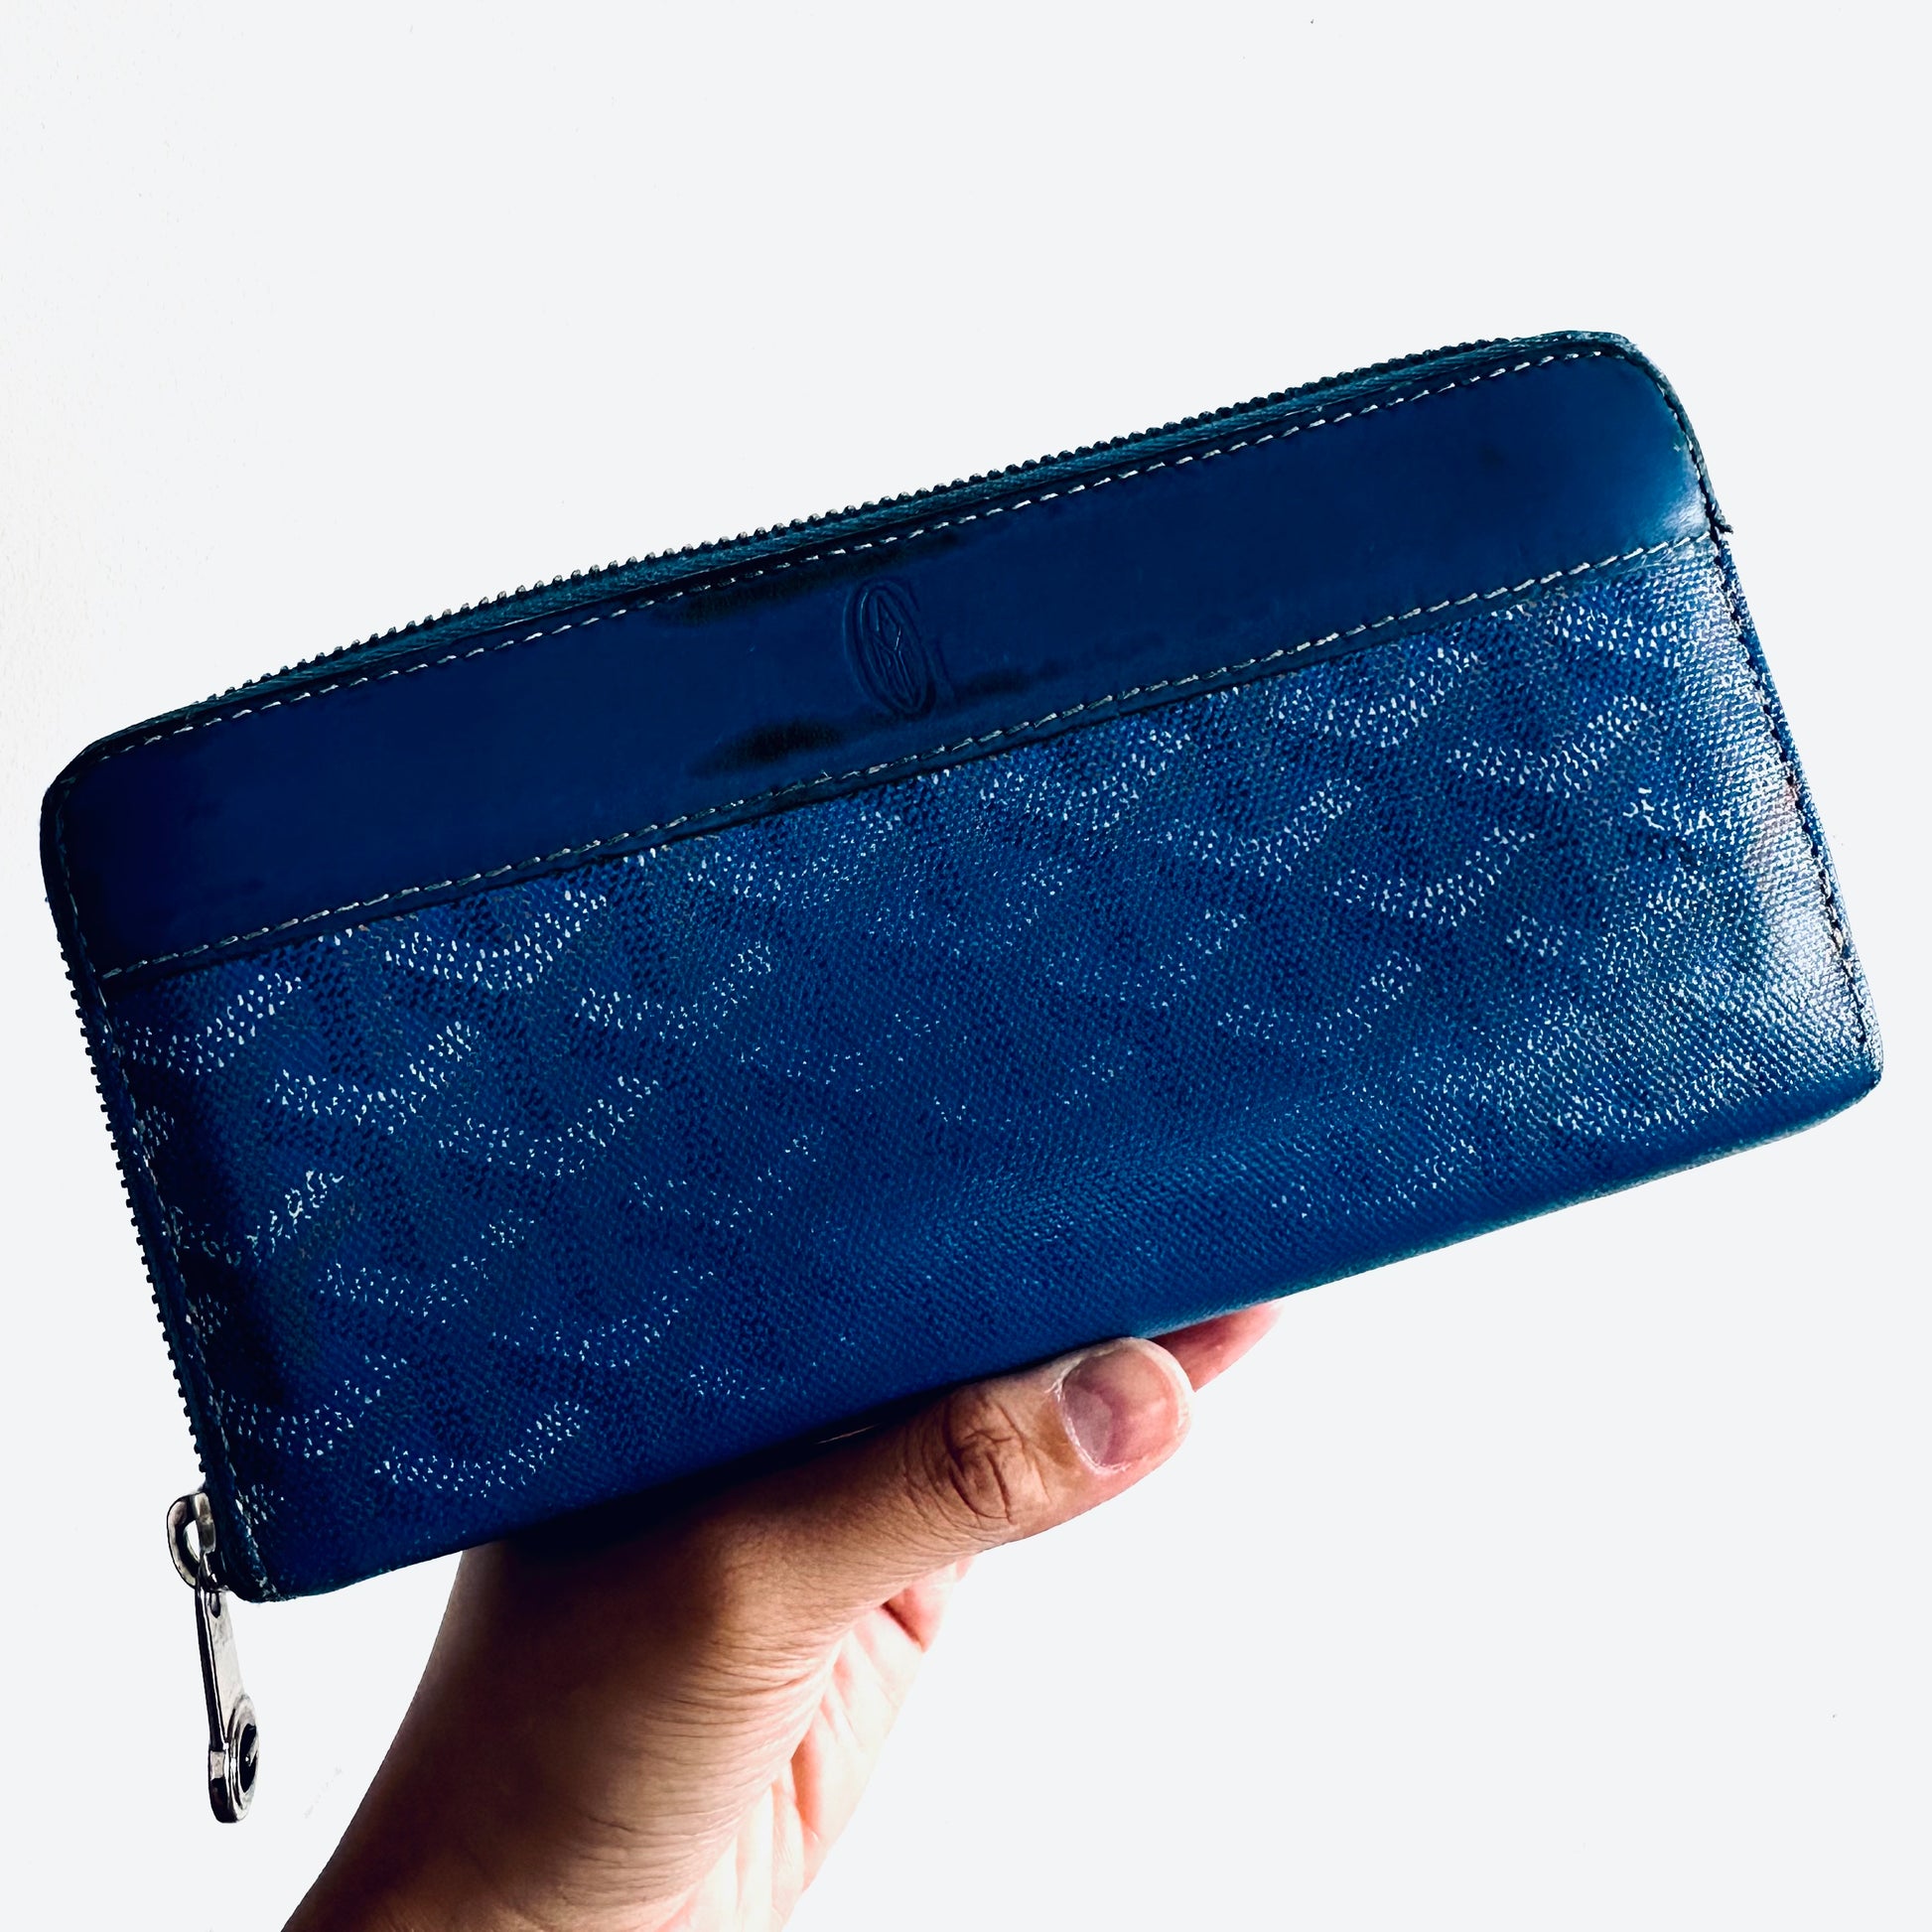 Goyard, Bags, Goyard Blue Matignon Zippy Wallet